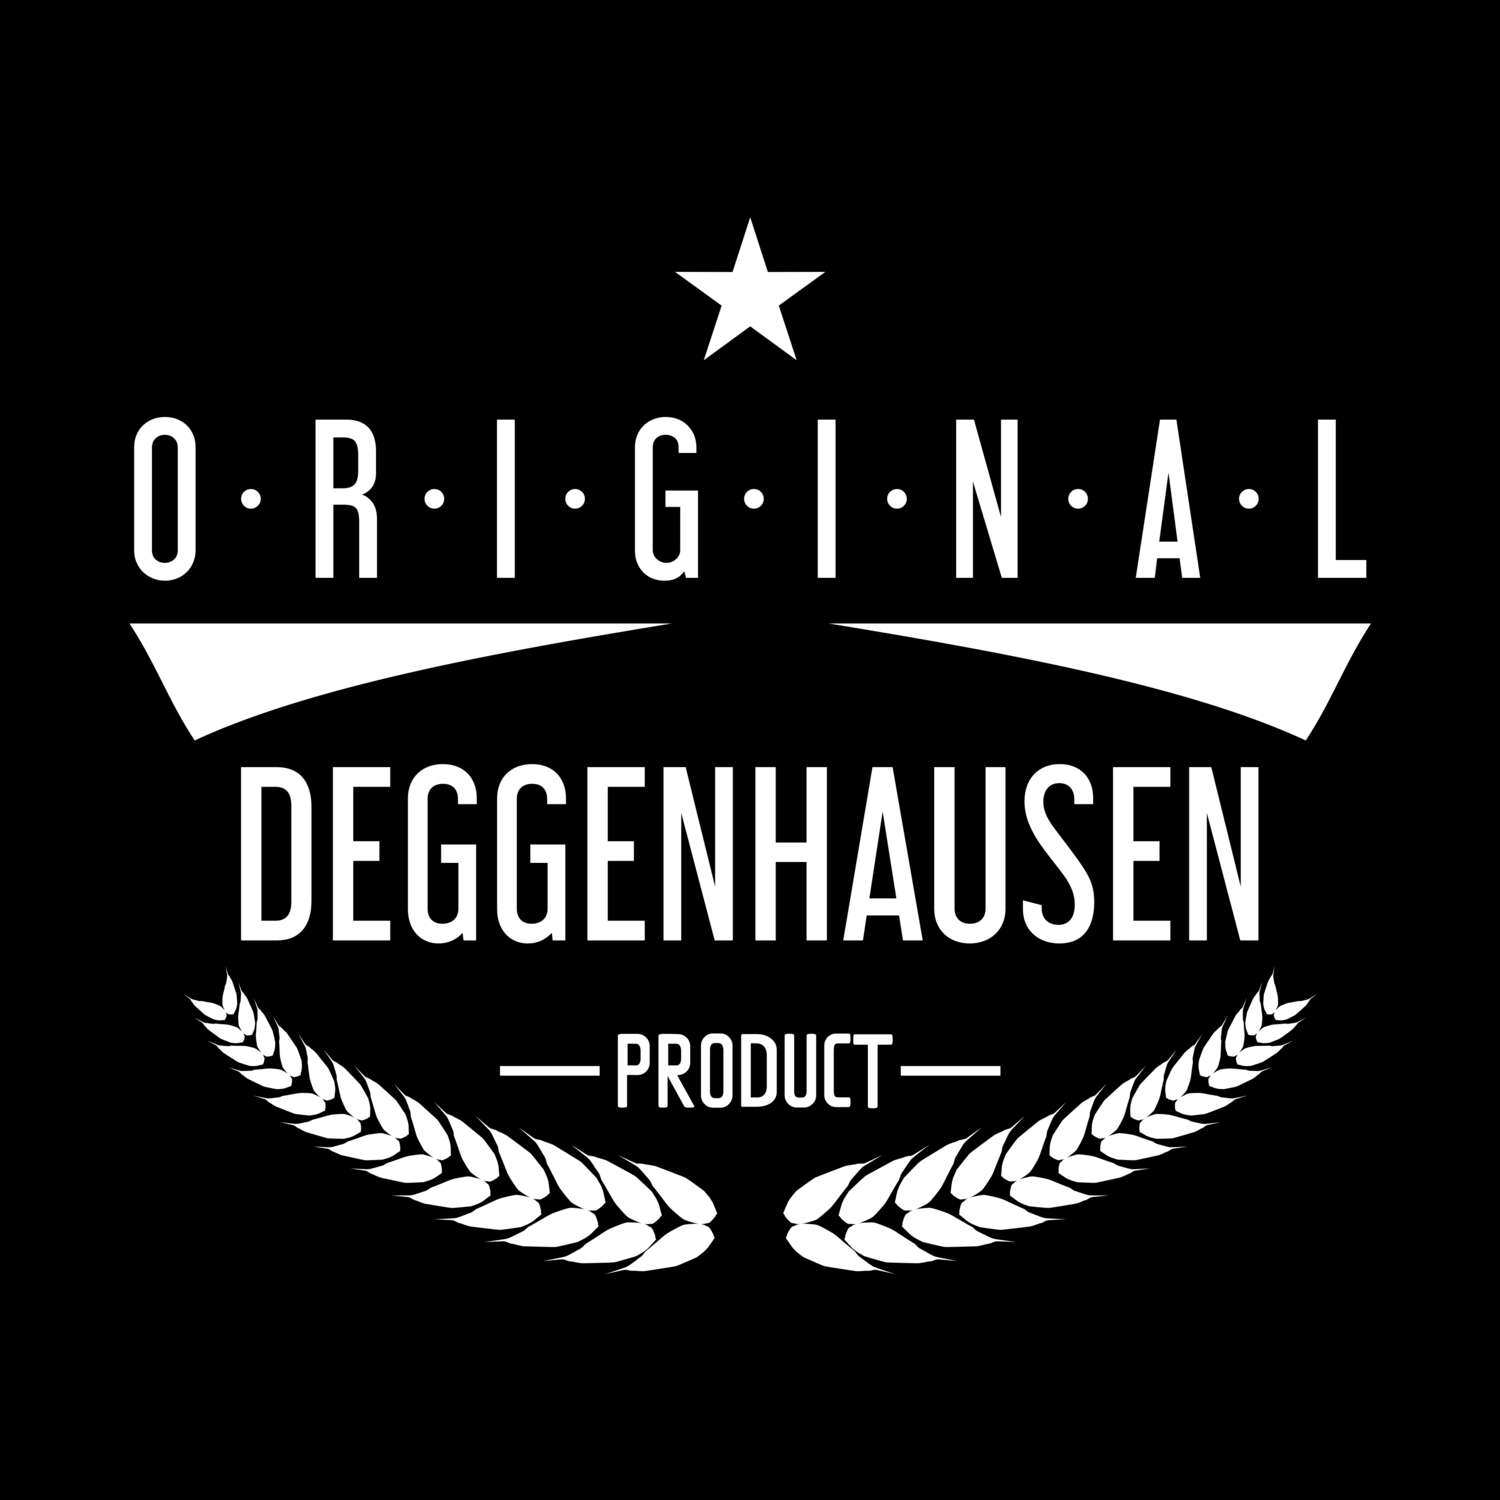 Deggenhausen T-Shirt »Original Product«